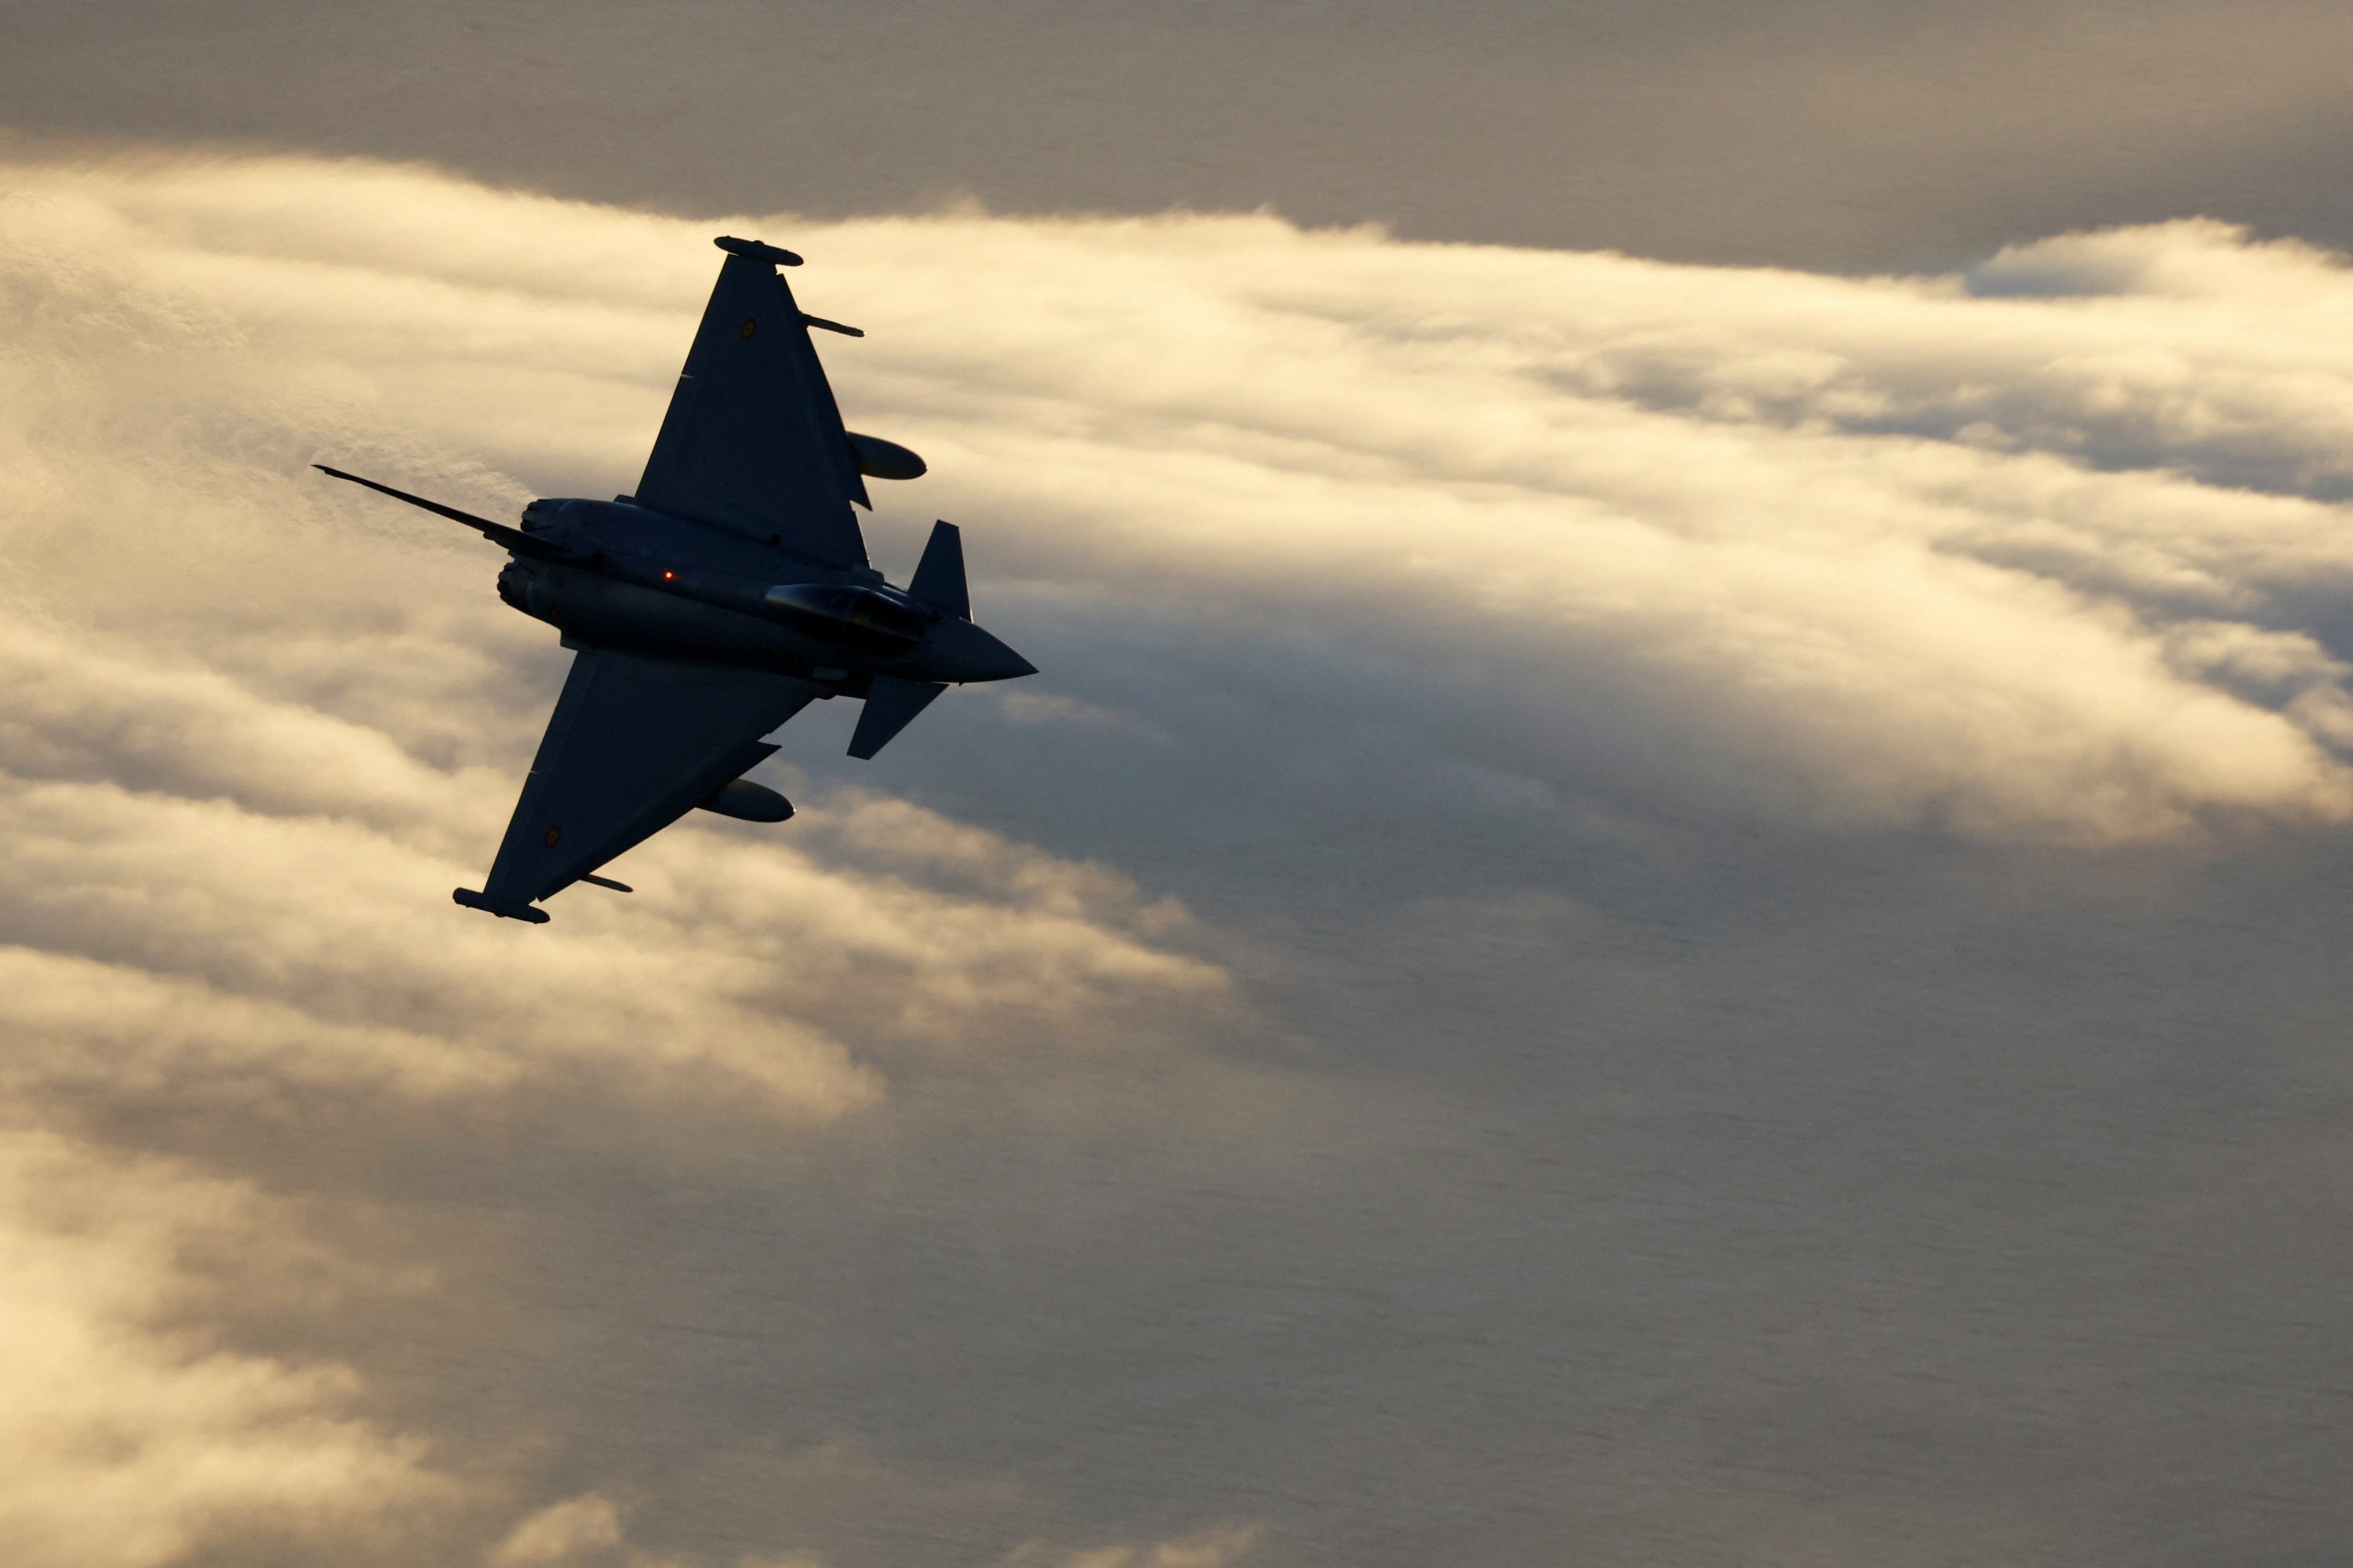 Türkiye sought Eurofighters after uncertainty over F-16 sale: Source ...